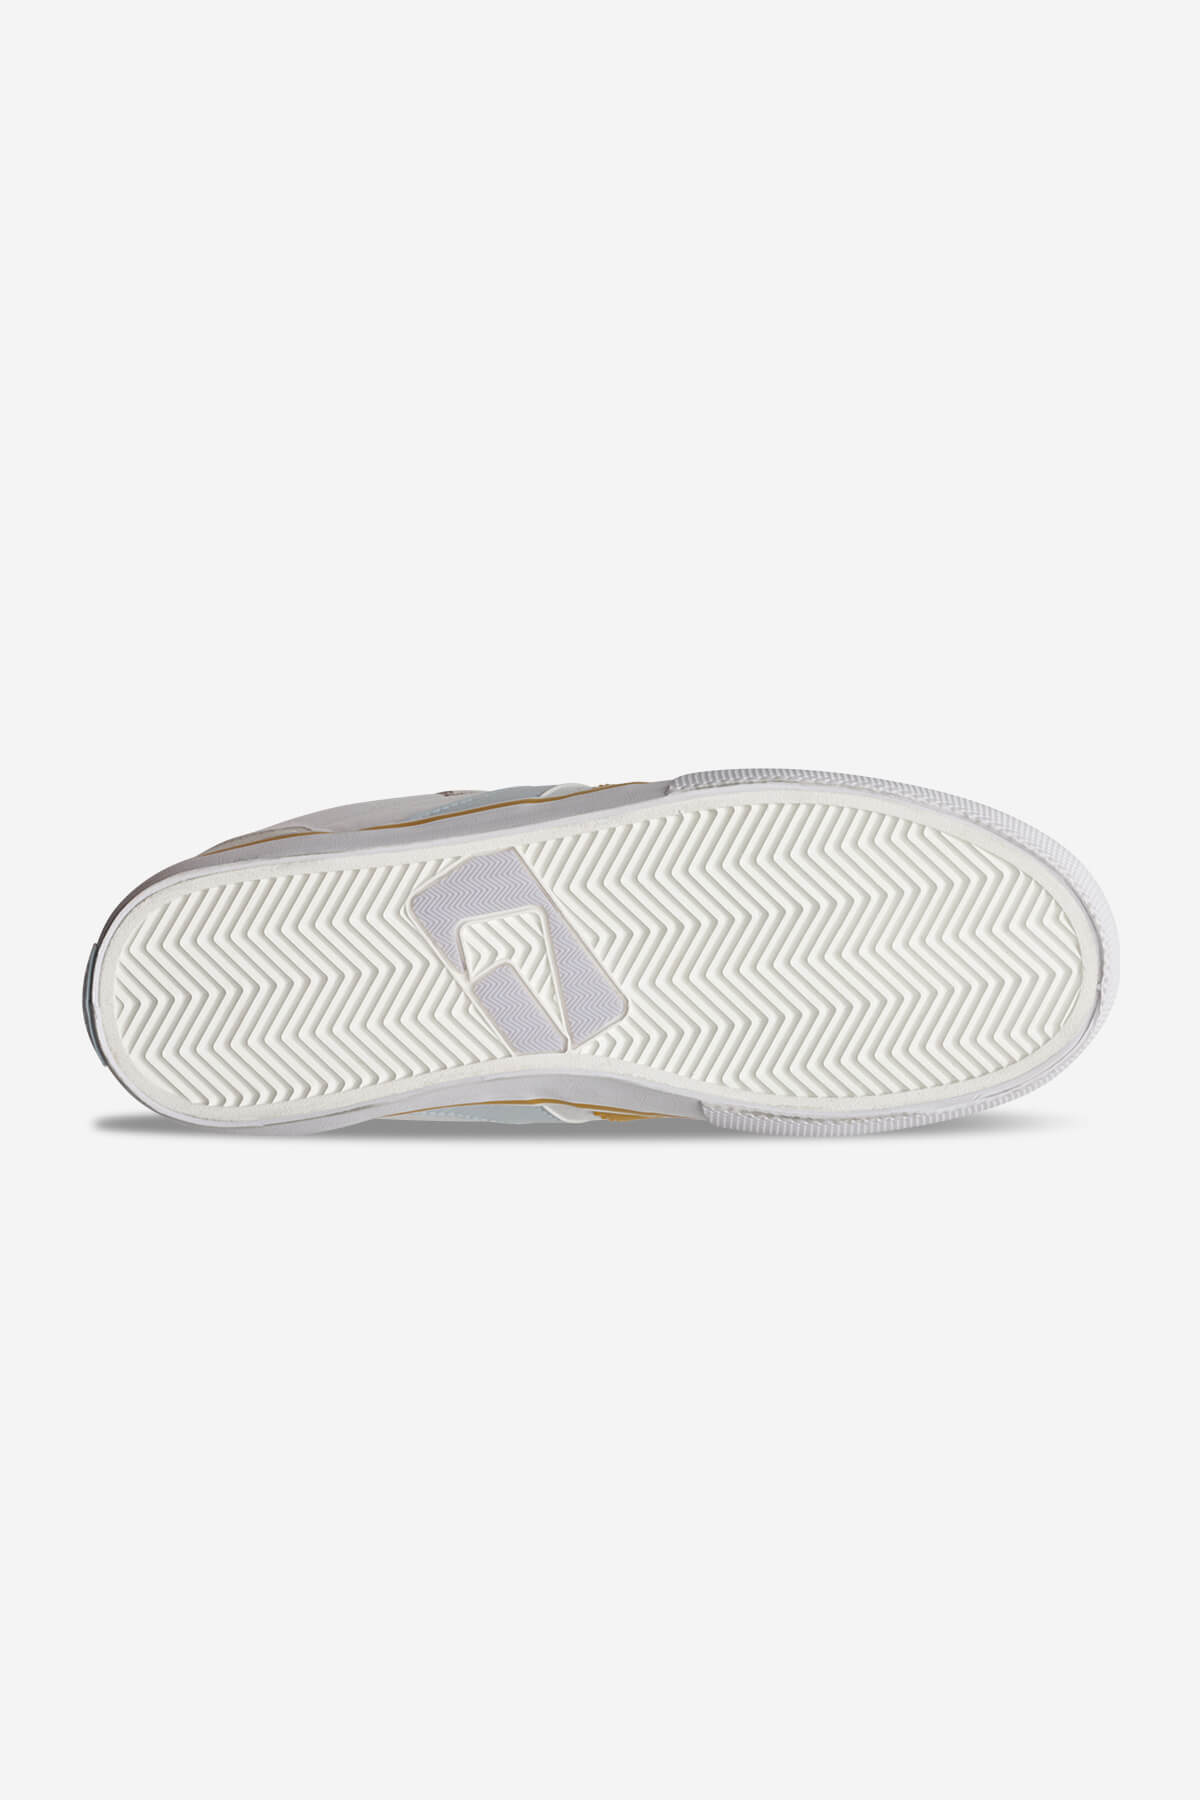 encore-2 white mustard  vapor  skateboard  scarpe